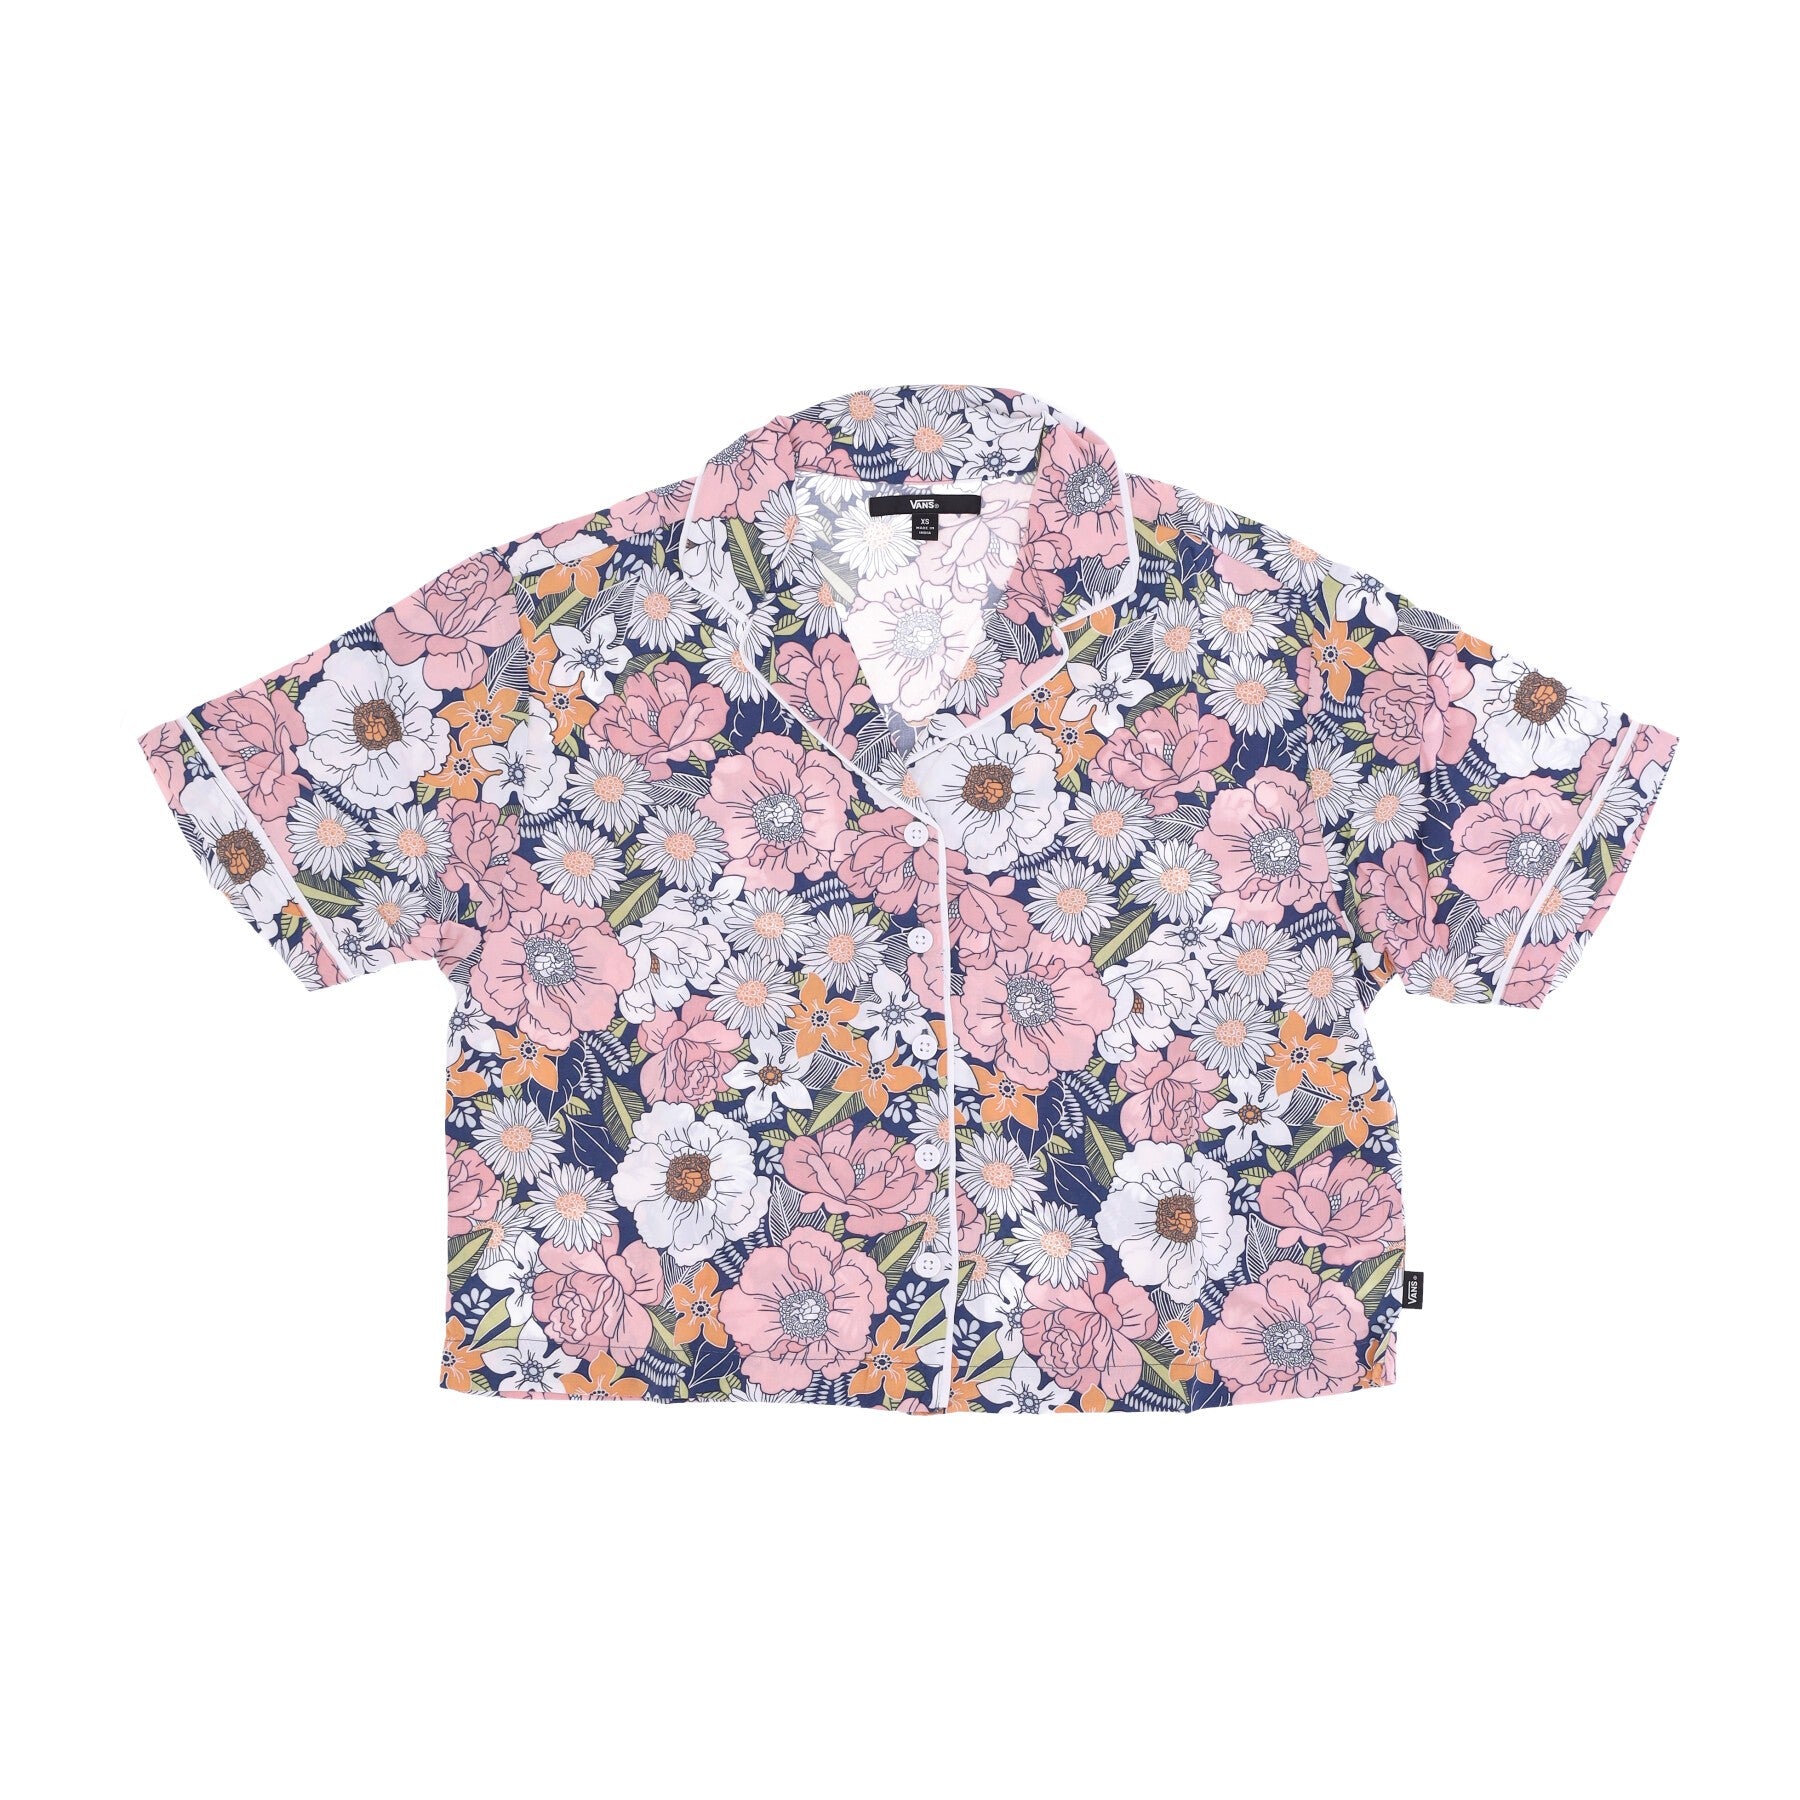 Retro Floral Woven Women's Short Sleeve Shirt Retro Floral